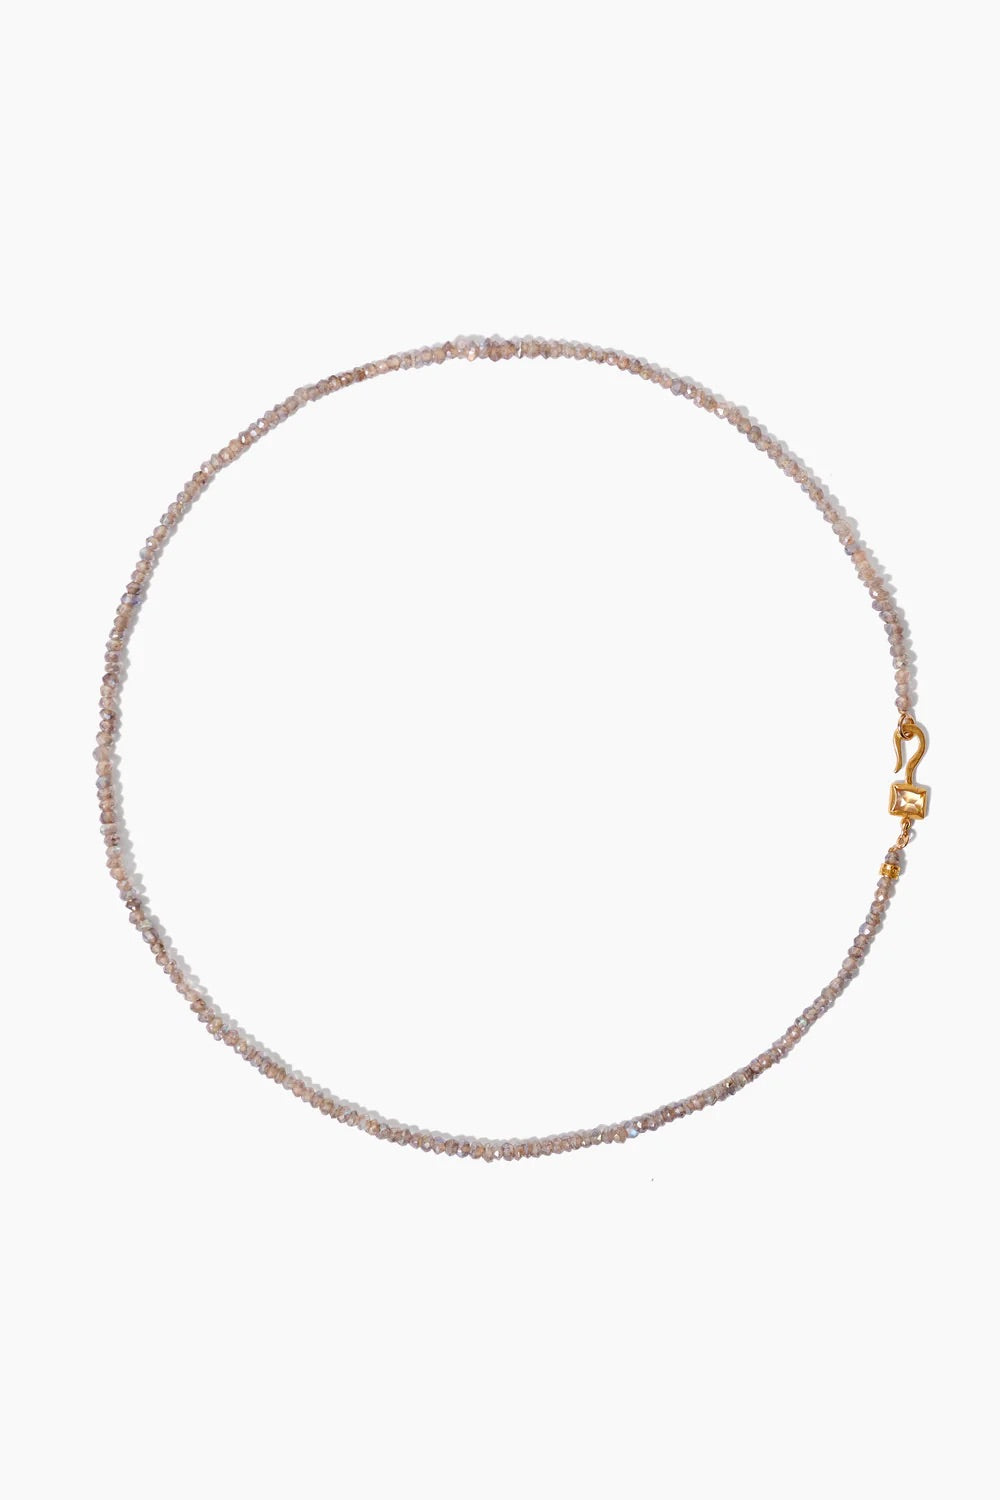 Labradorite Petite Odyssey Necklace by CHAN LUU - SALE